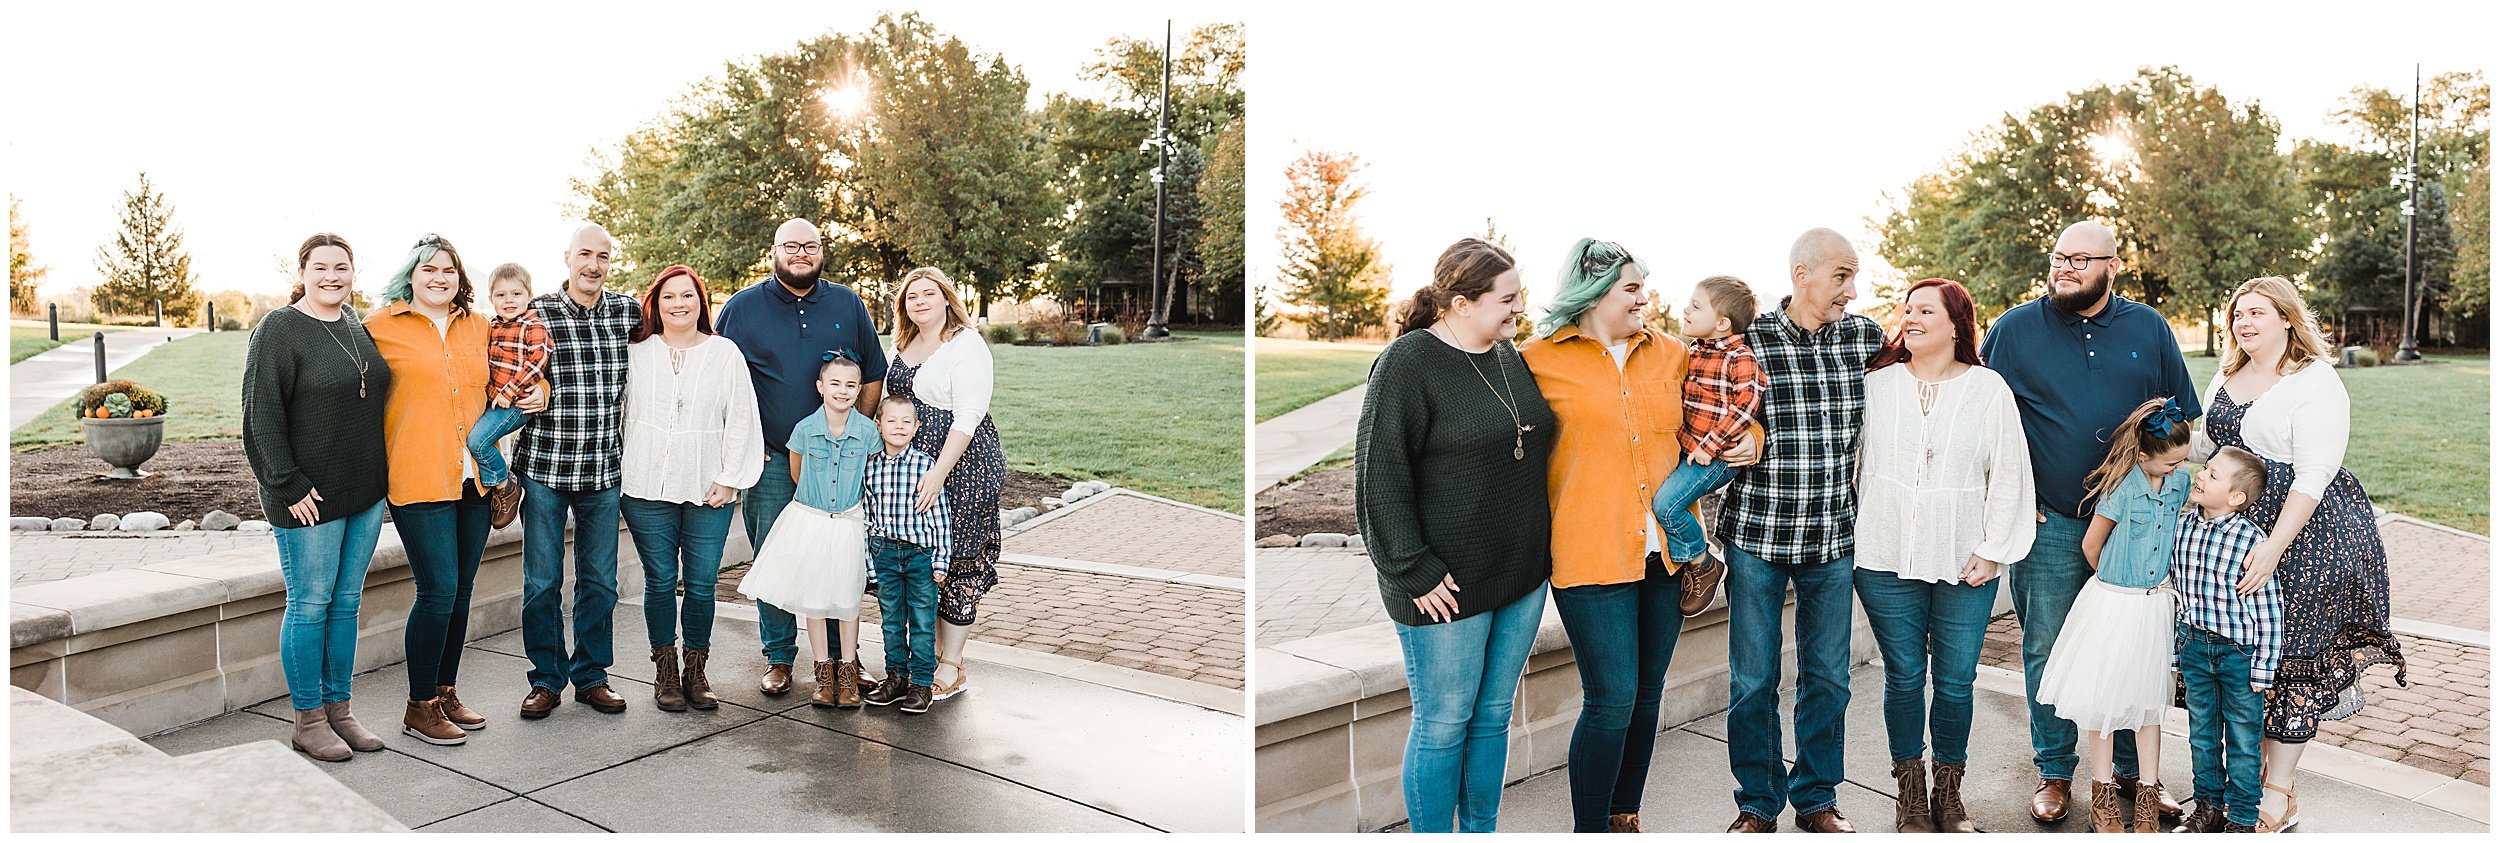 Extended Family Photography | Carmel Indiana 